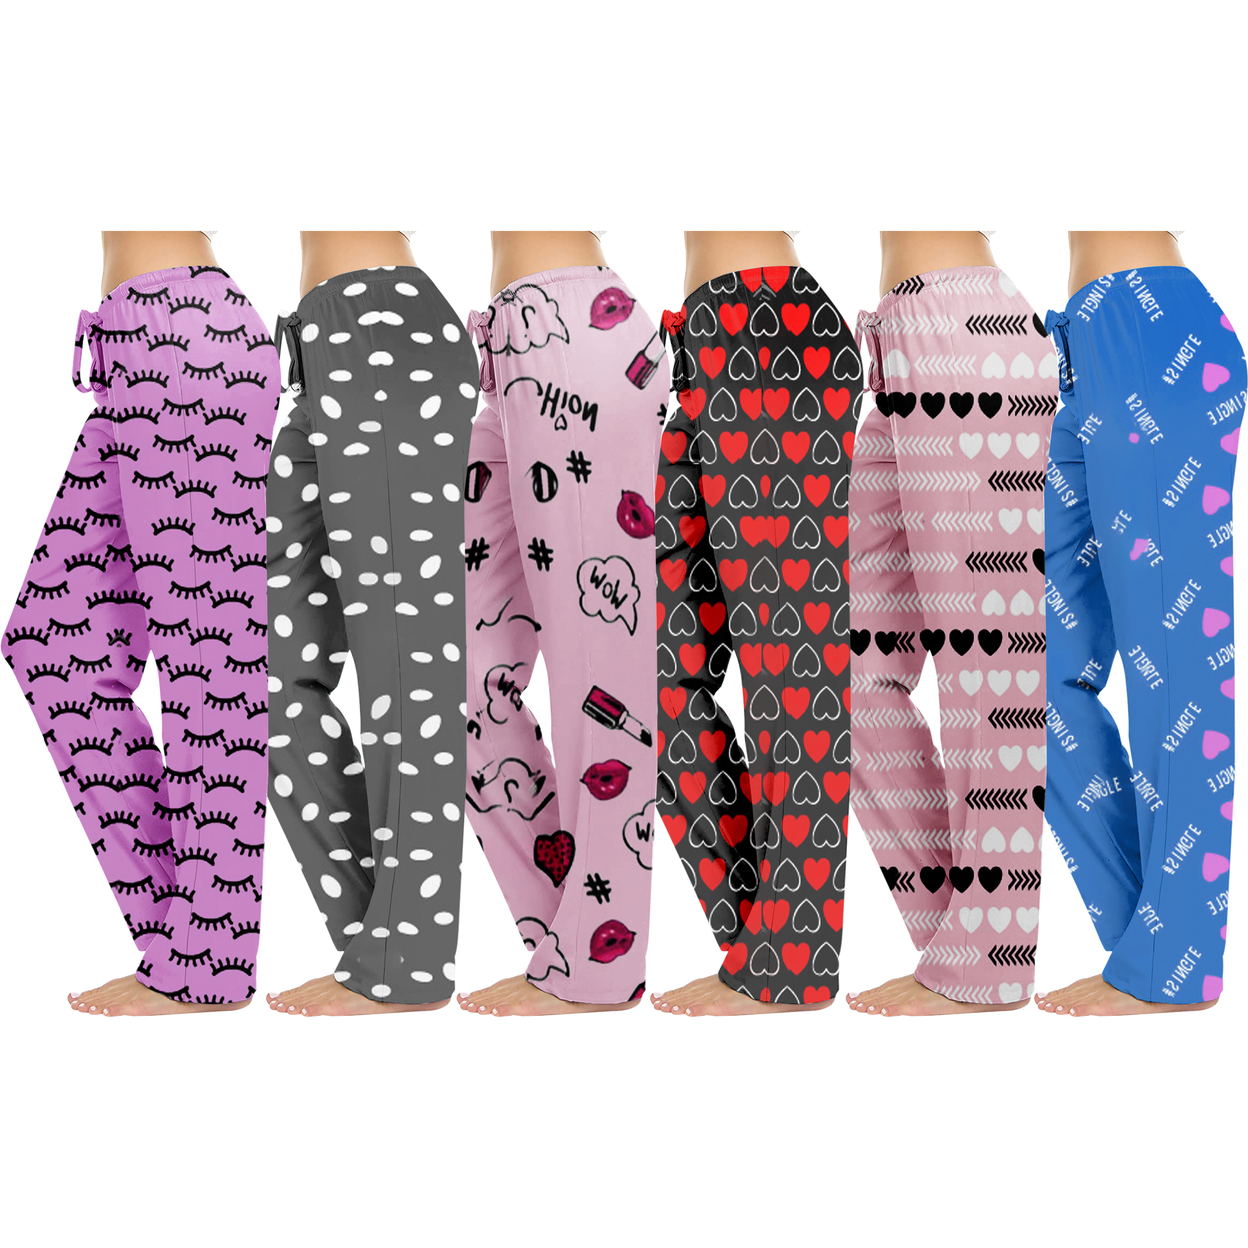 4-Pack: Women's Casual Fun Printed Lightweight Lounge Terry Knit Pajama Bottom Pants - X-large, Love